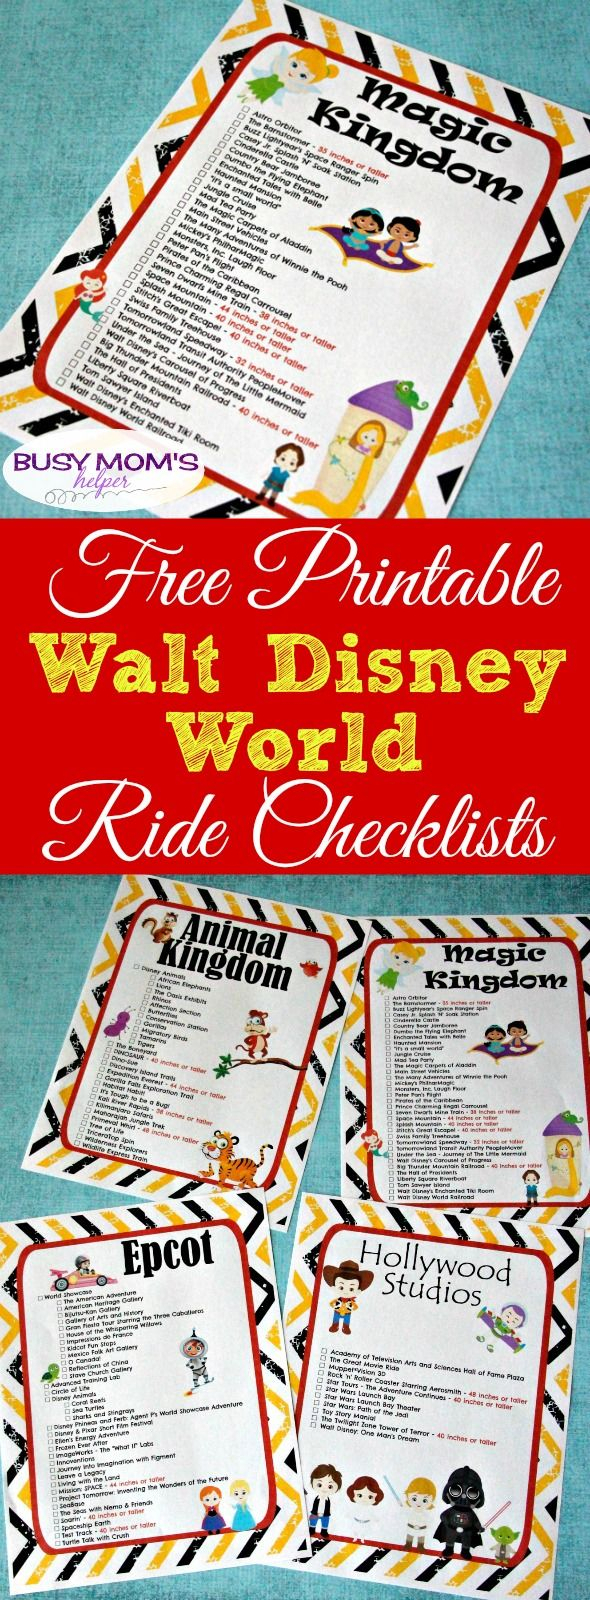 Free Printable Walt Disney World Ride Checklists | Walt